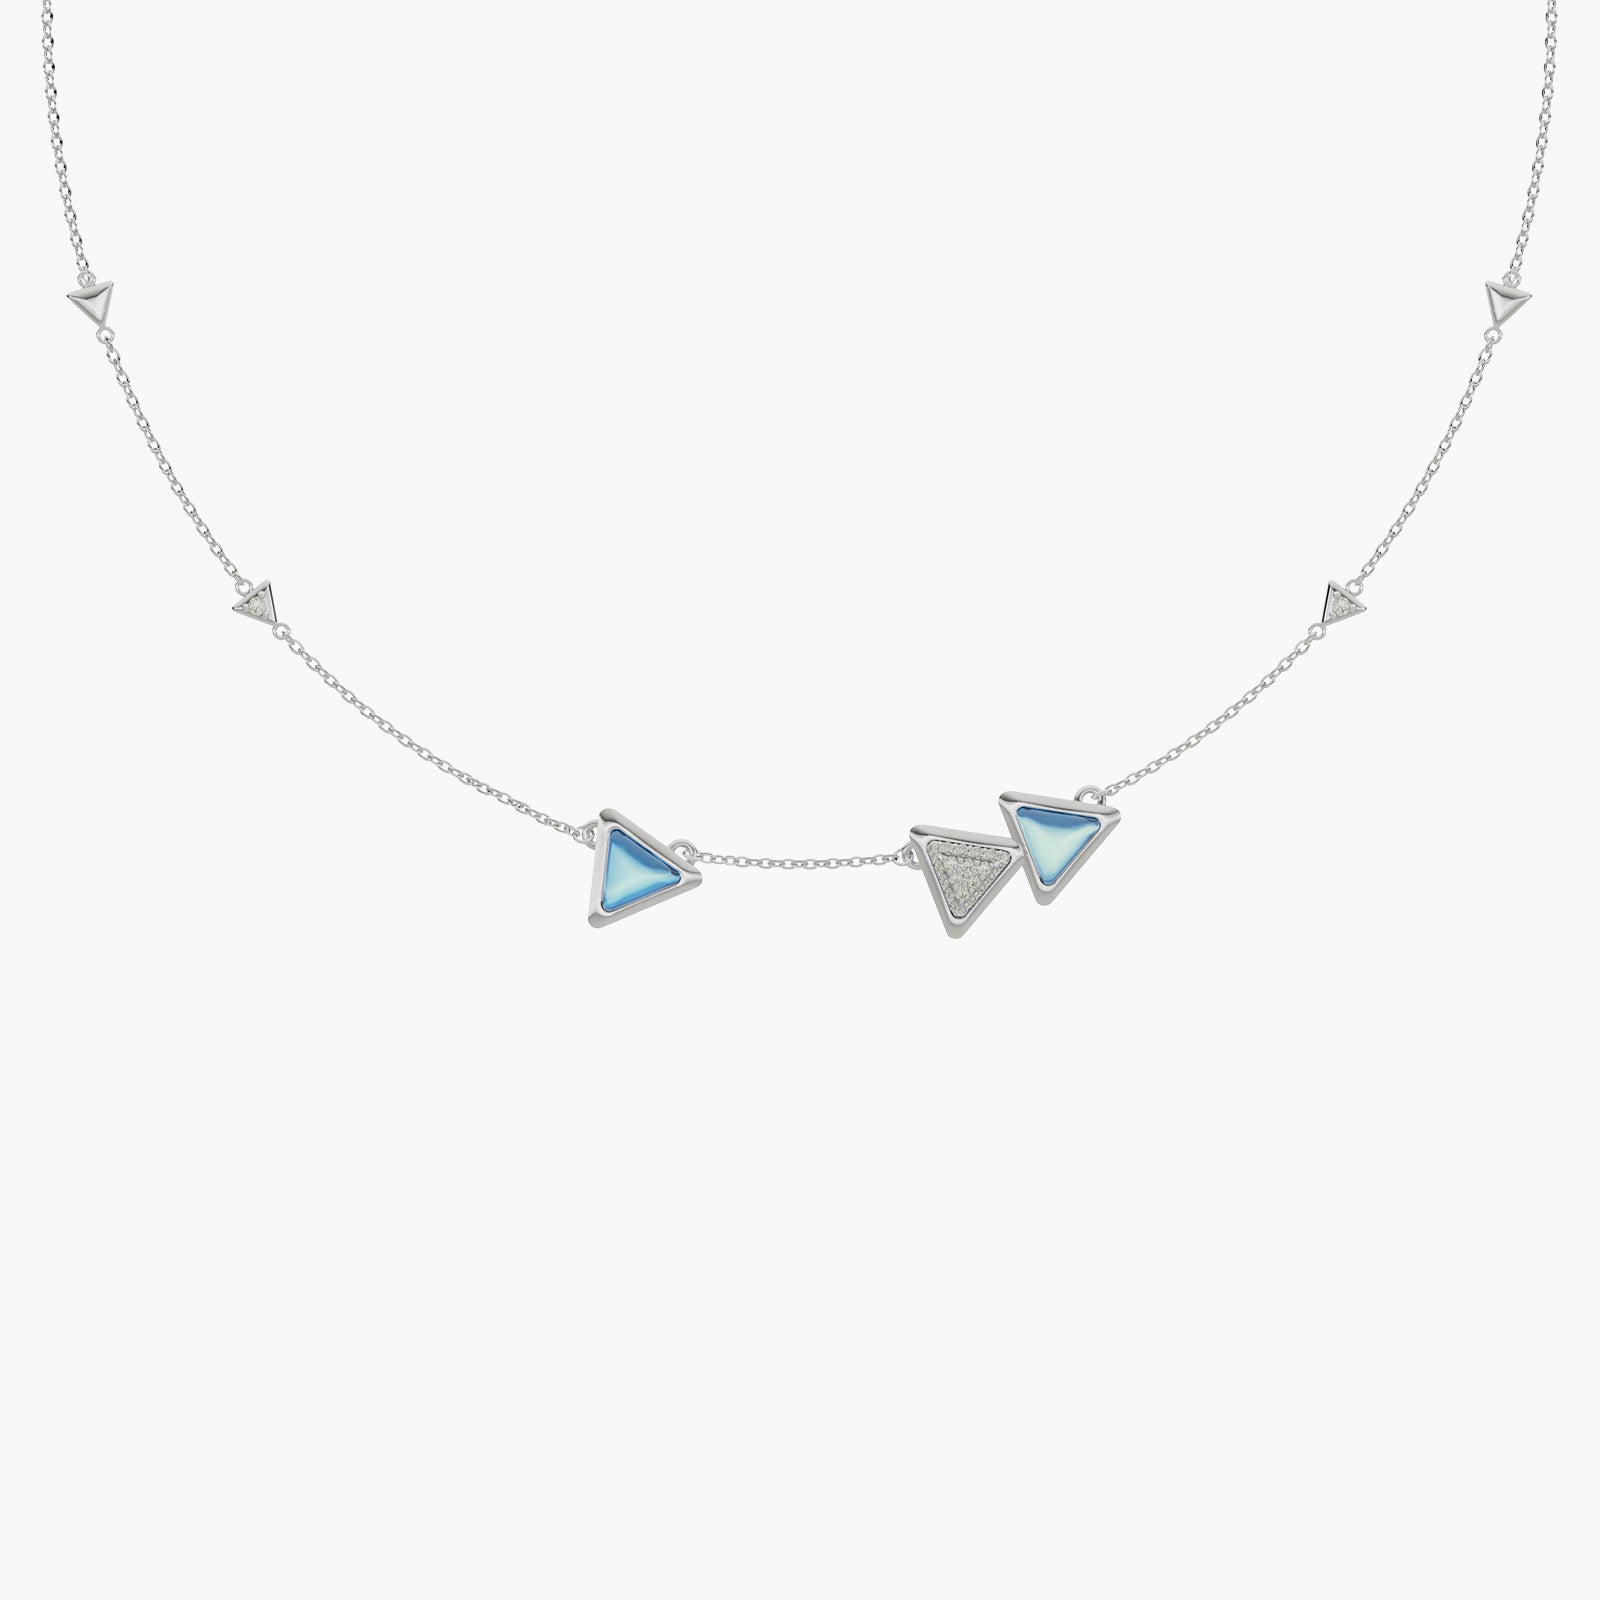 Necklace Dove Vai Forward Exquisite White Gold Blue Topaz and Diamonds